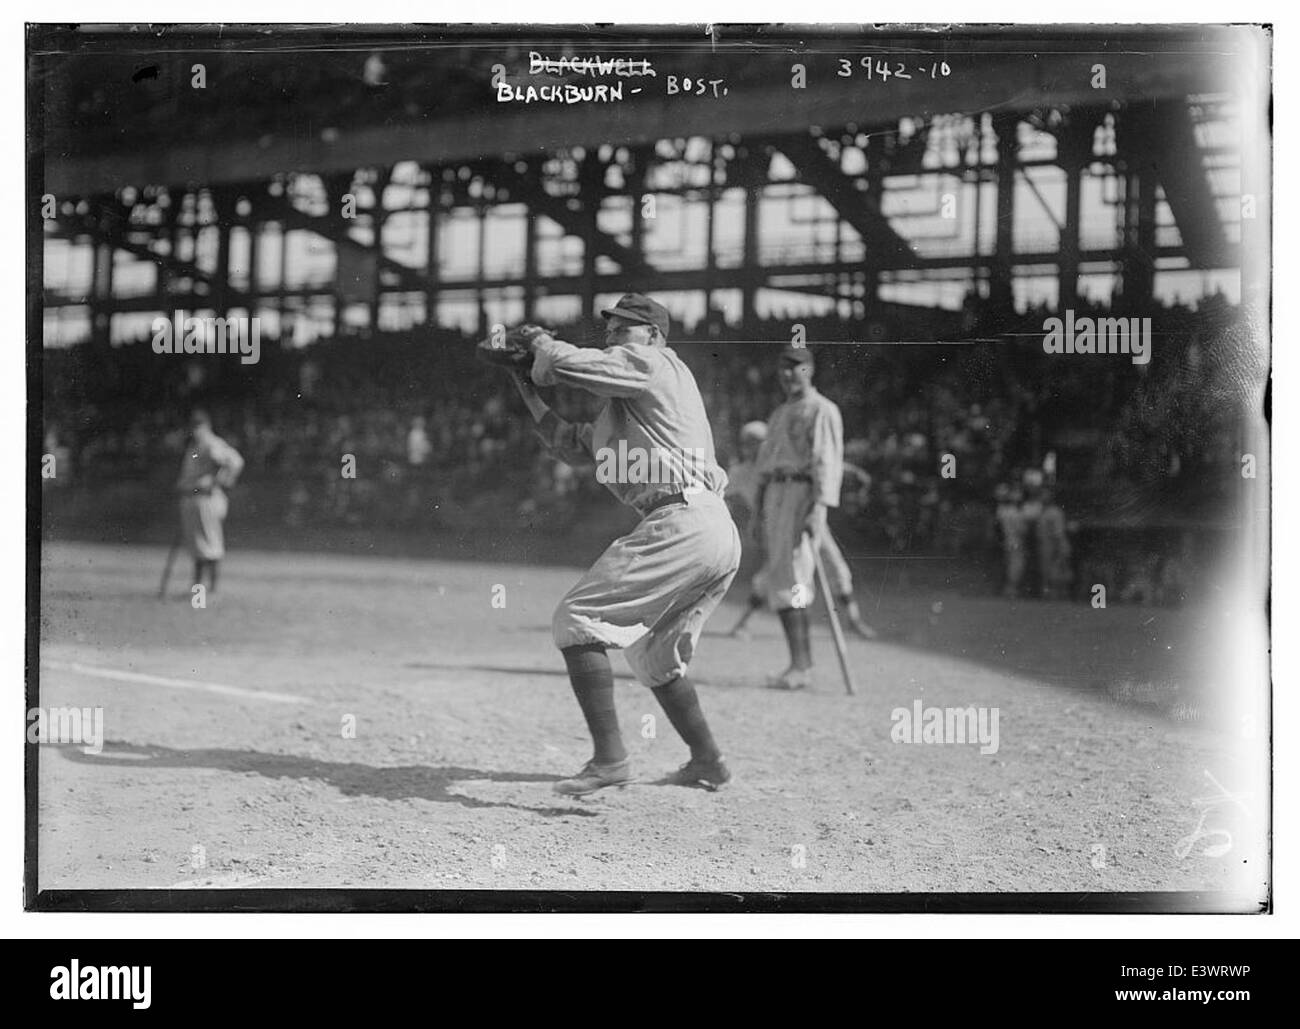 [Earl Blackburn, Boston NL (baseball)] (LOC) Stock Photo